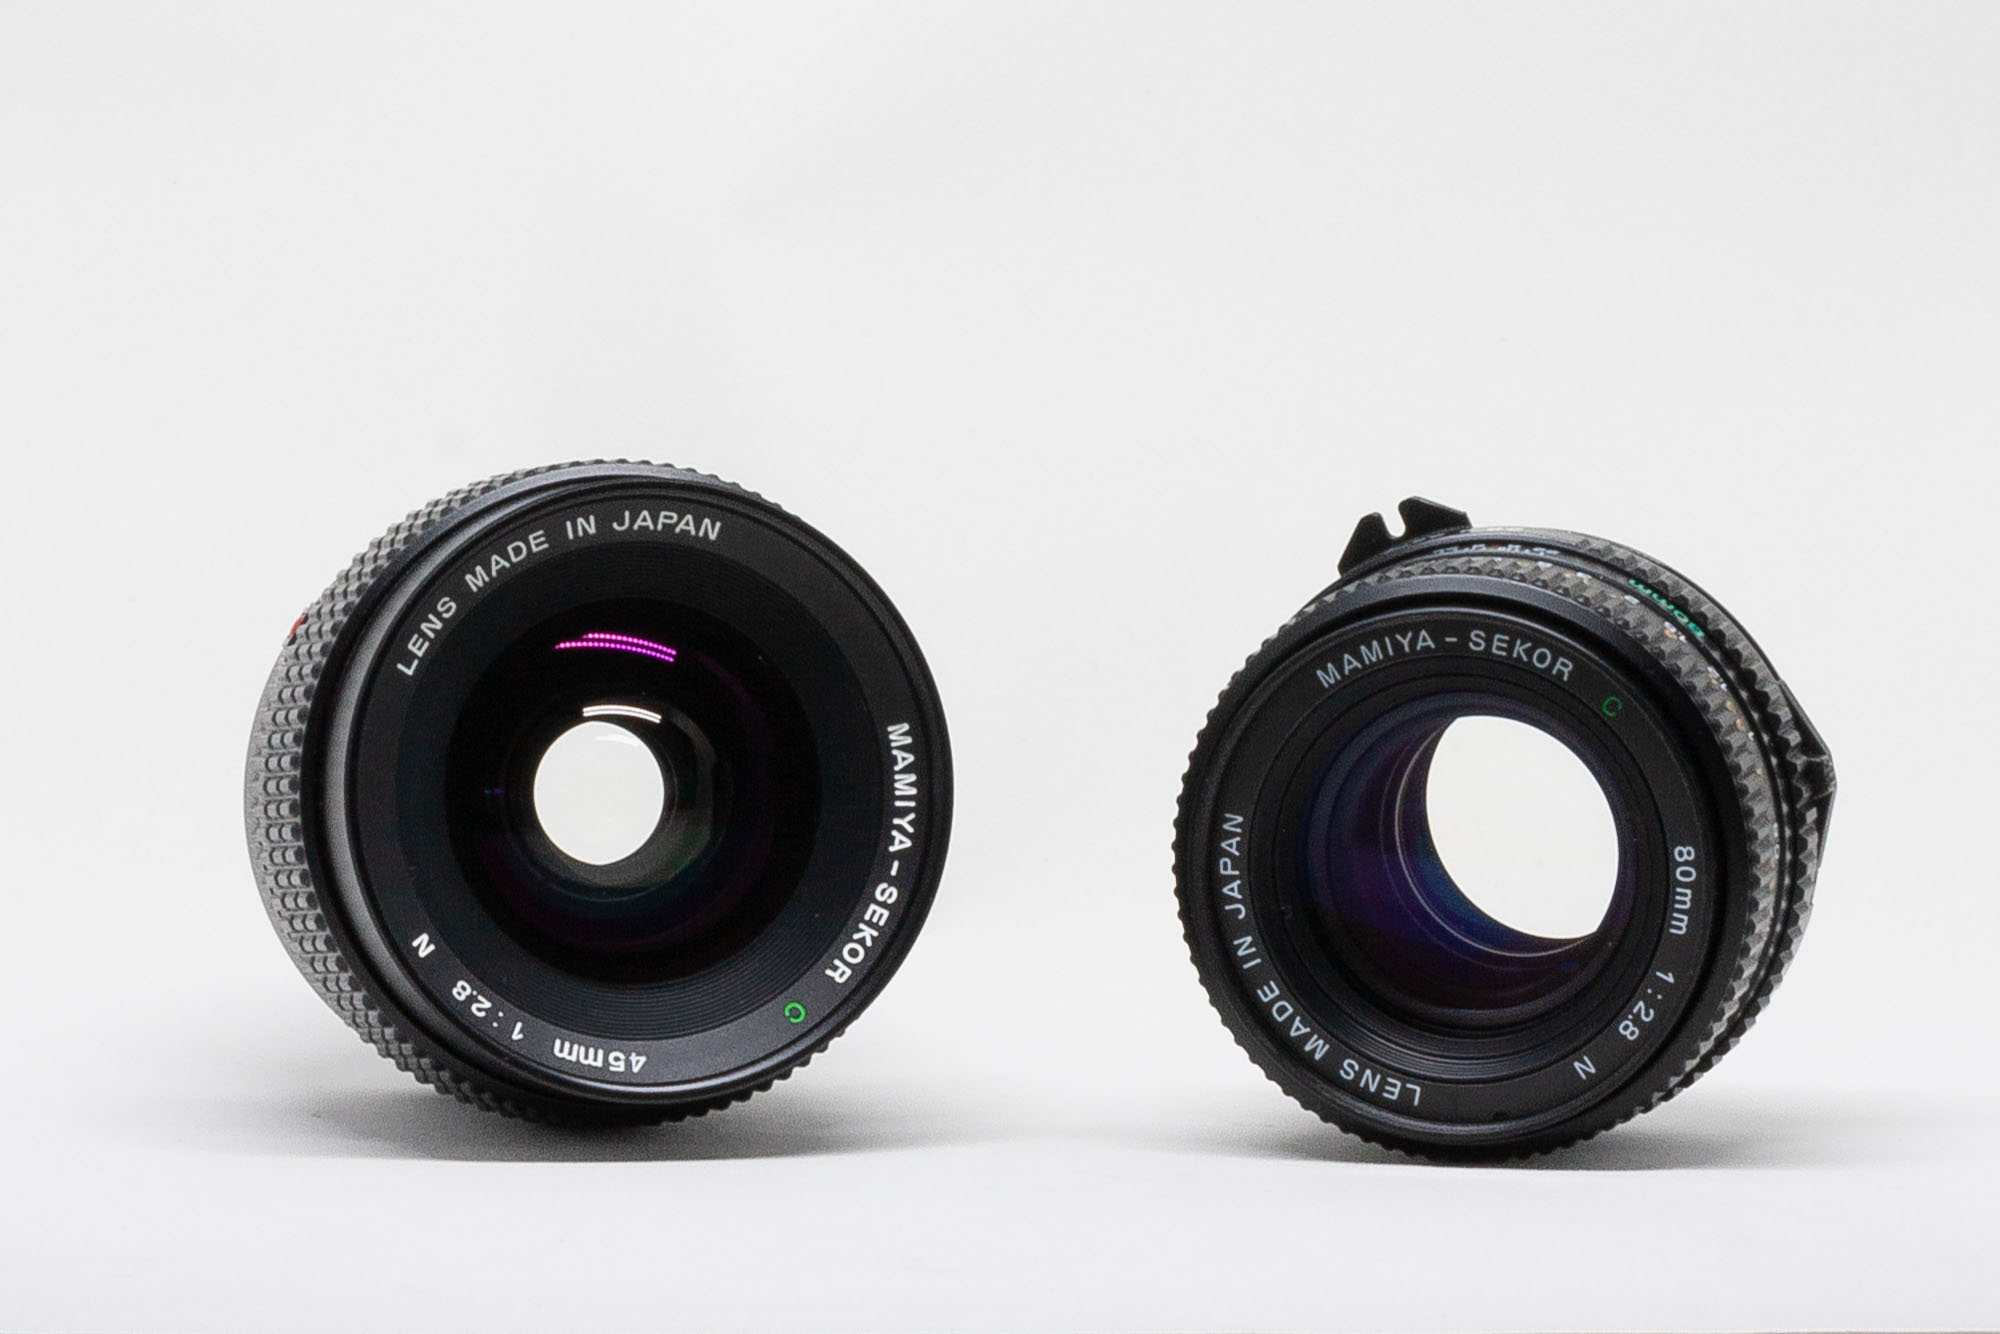 Frontal comparison of Mamiya-Sekor C 45mm f:2.8 N and Mamiya-Sekor C 80mm f:2.8 N lenses